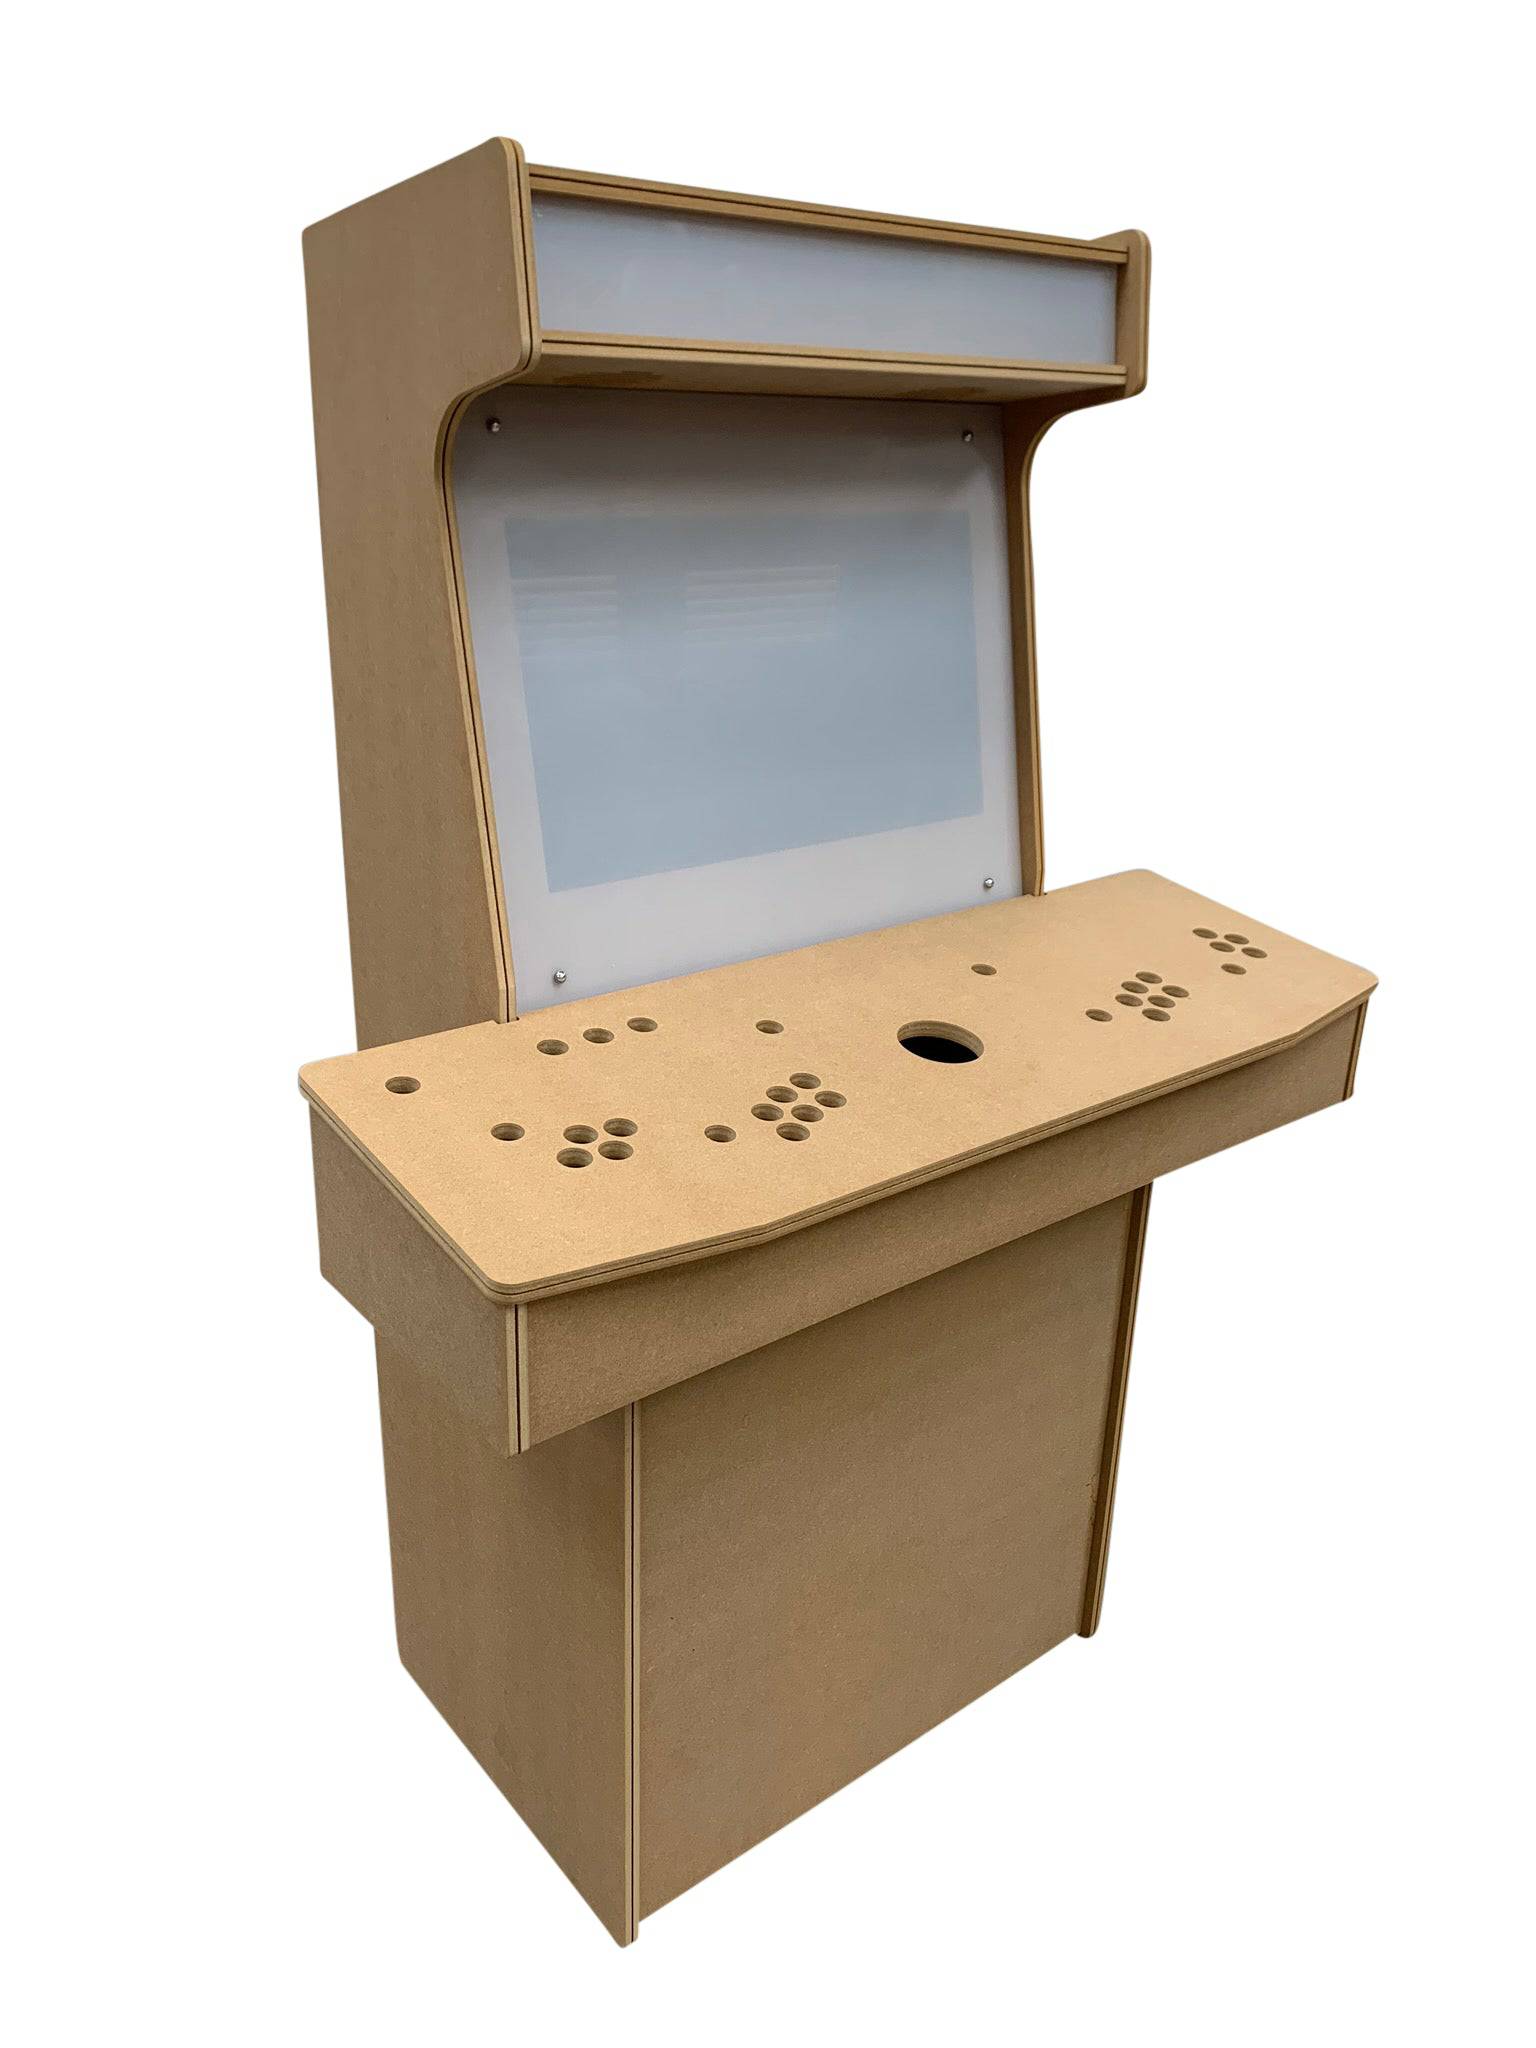 27" Upright 4 Player Arcade Cabinet - Flatout Arcades